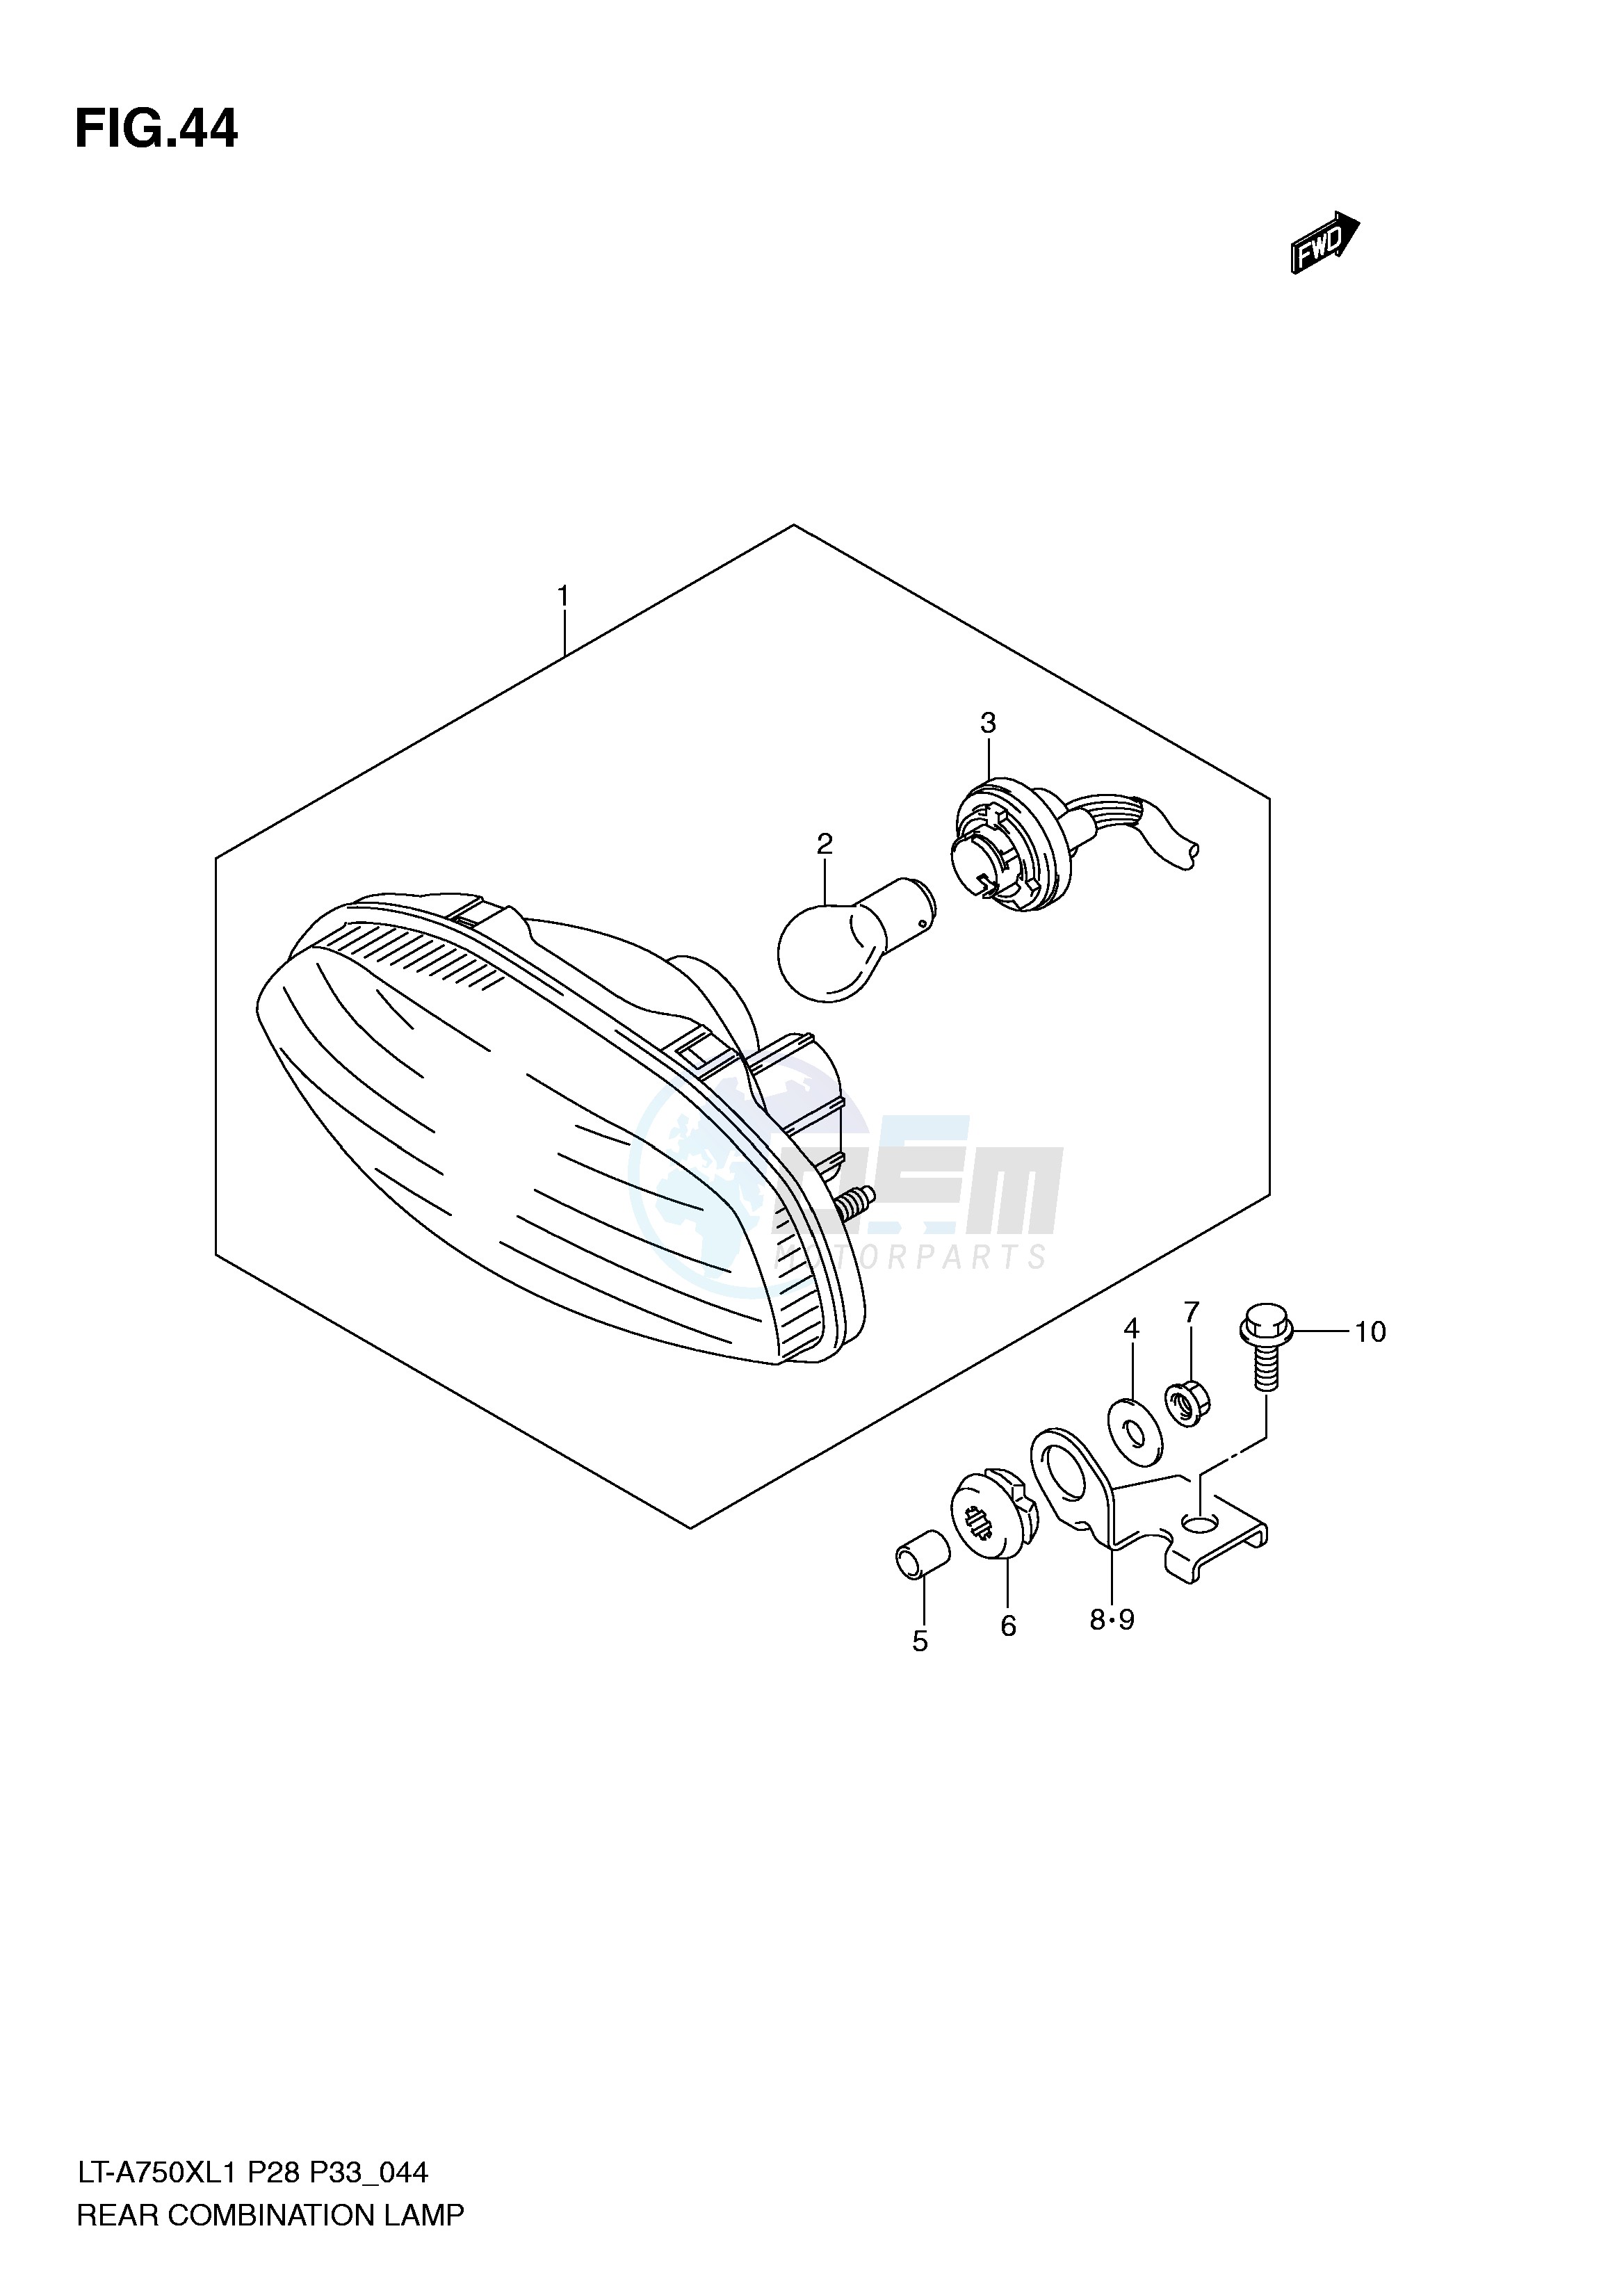 REAR COMBINATION LAMP (LT-A750XL1 P33) blueprint